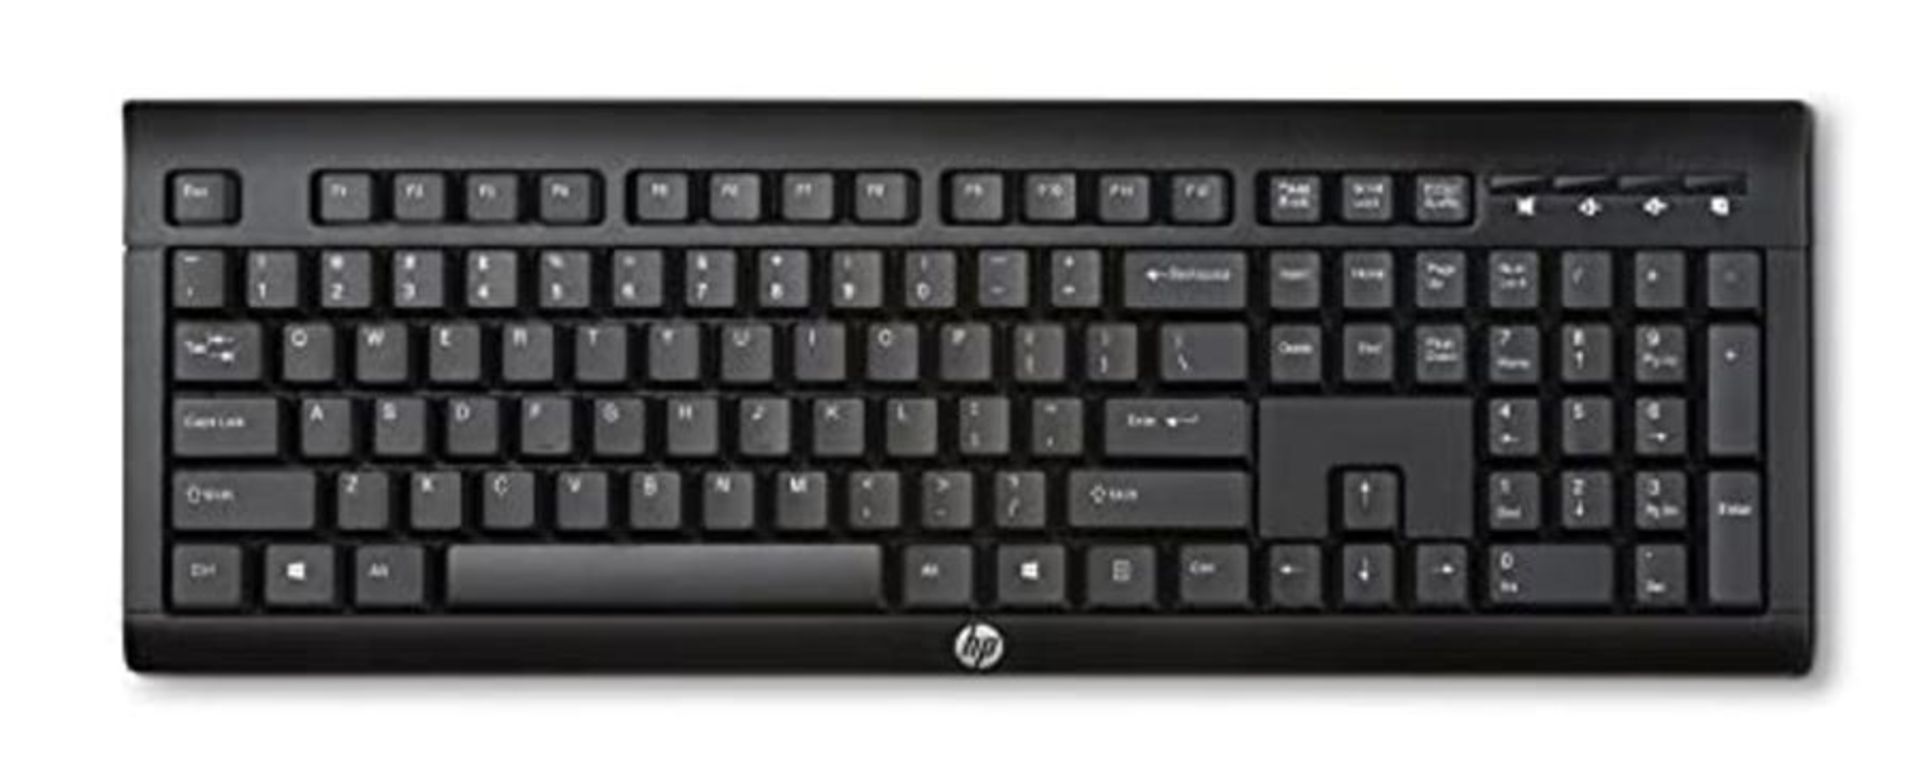 HP K2500 Black 2.4 GHz USB Wireless Keyboard